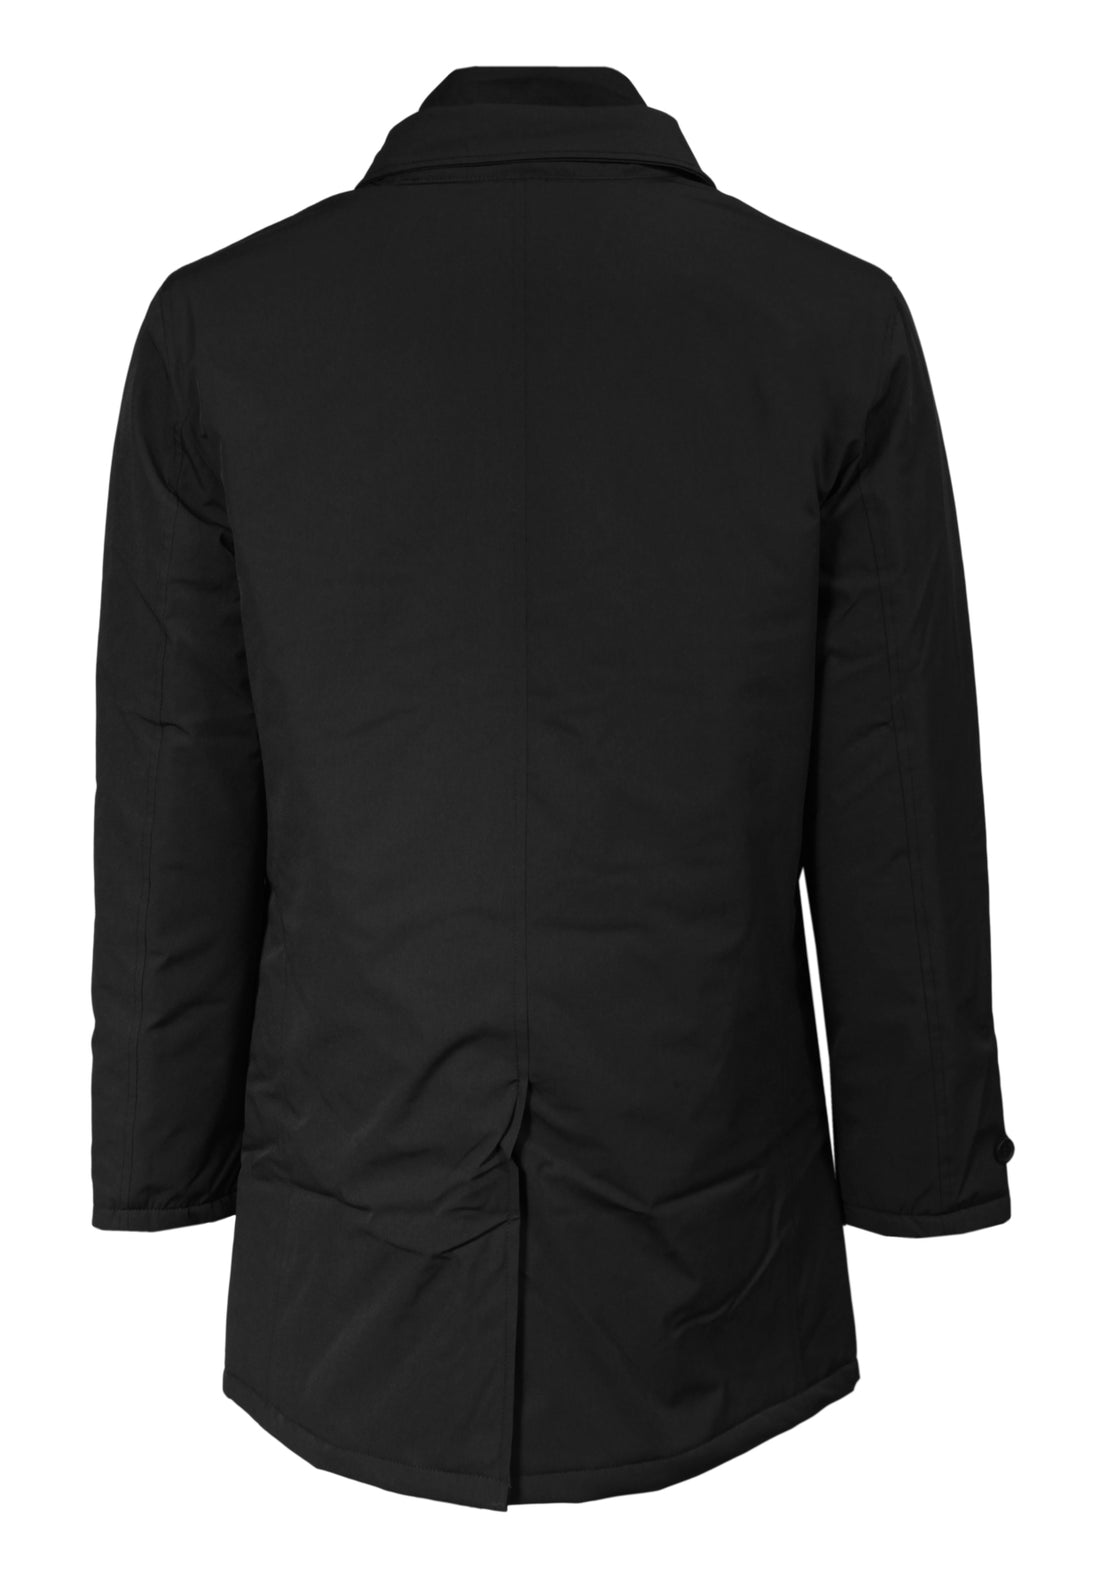 Trench Coat Shirt Collar Removable internal bib - Black